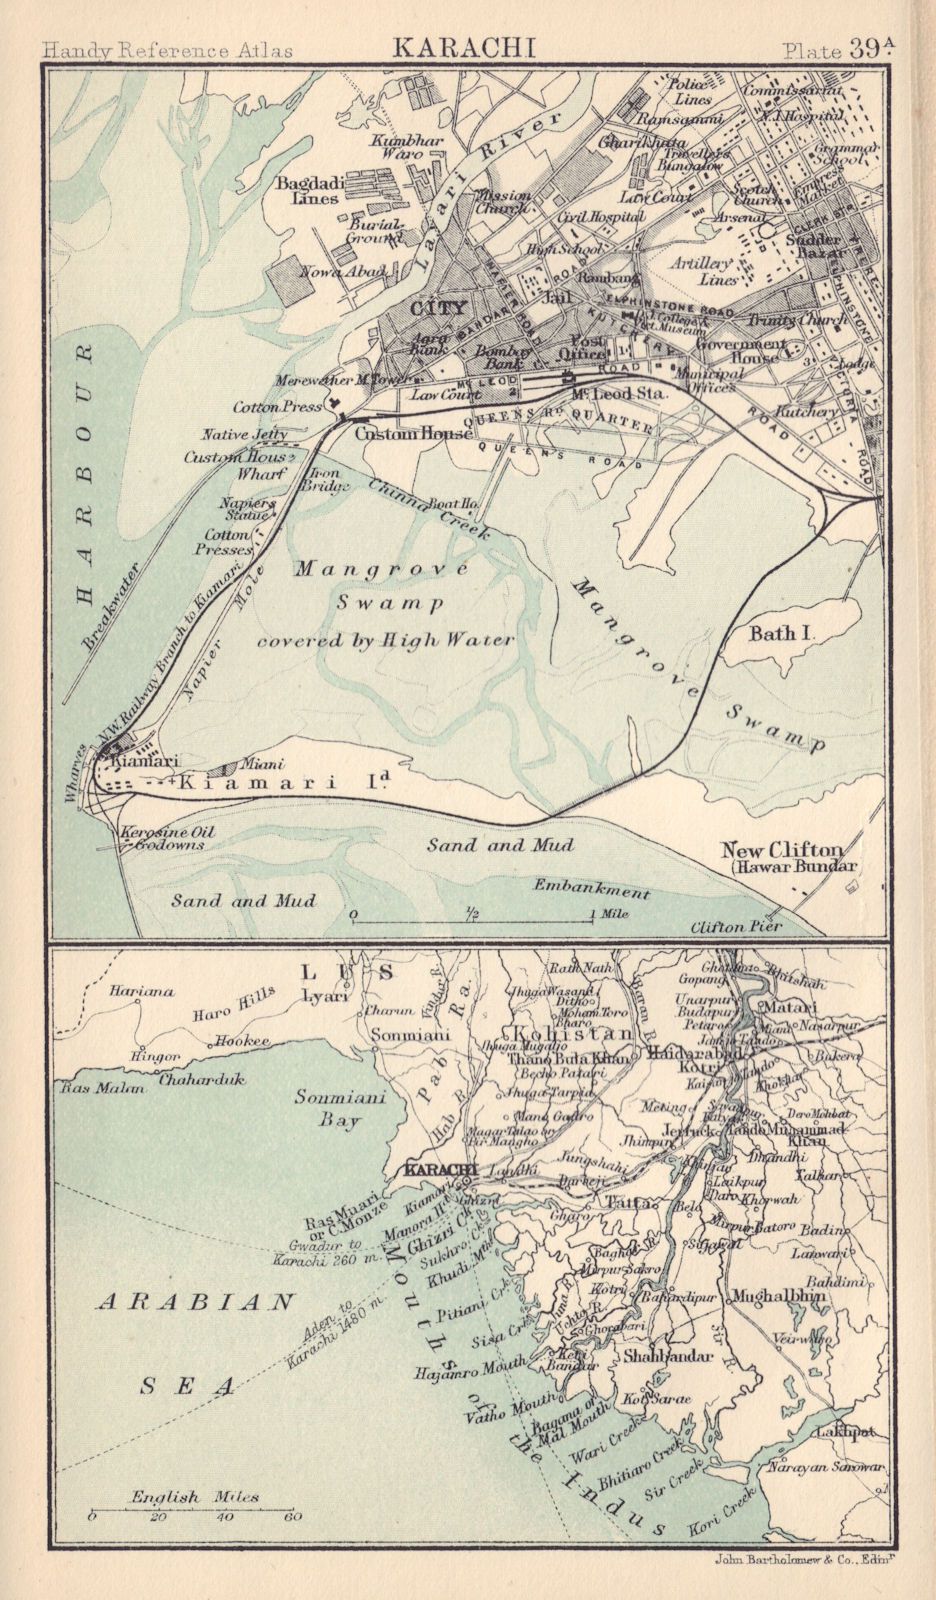 Associate Product Karachi city plan and environs. Pakistan. BARTHOLOMEW 1898 old antique map